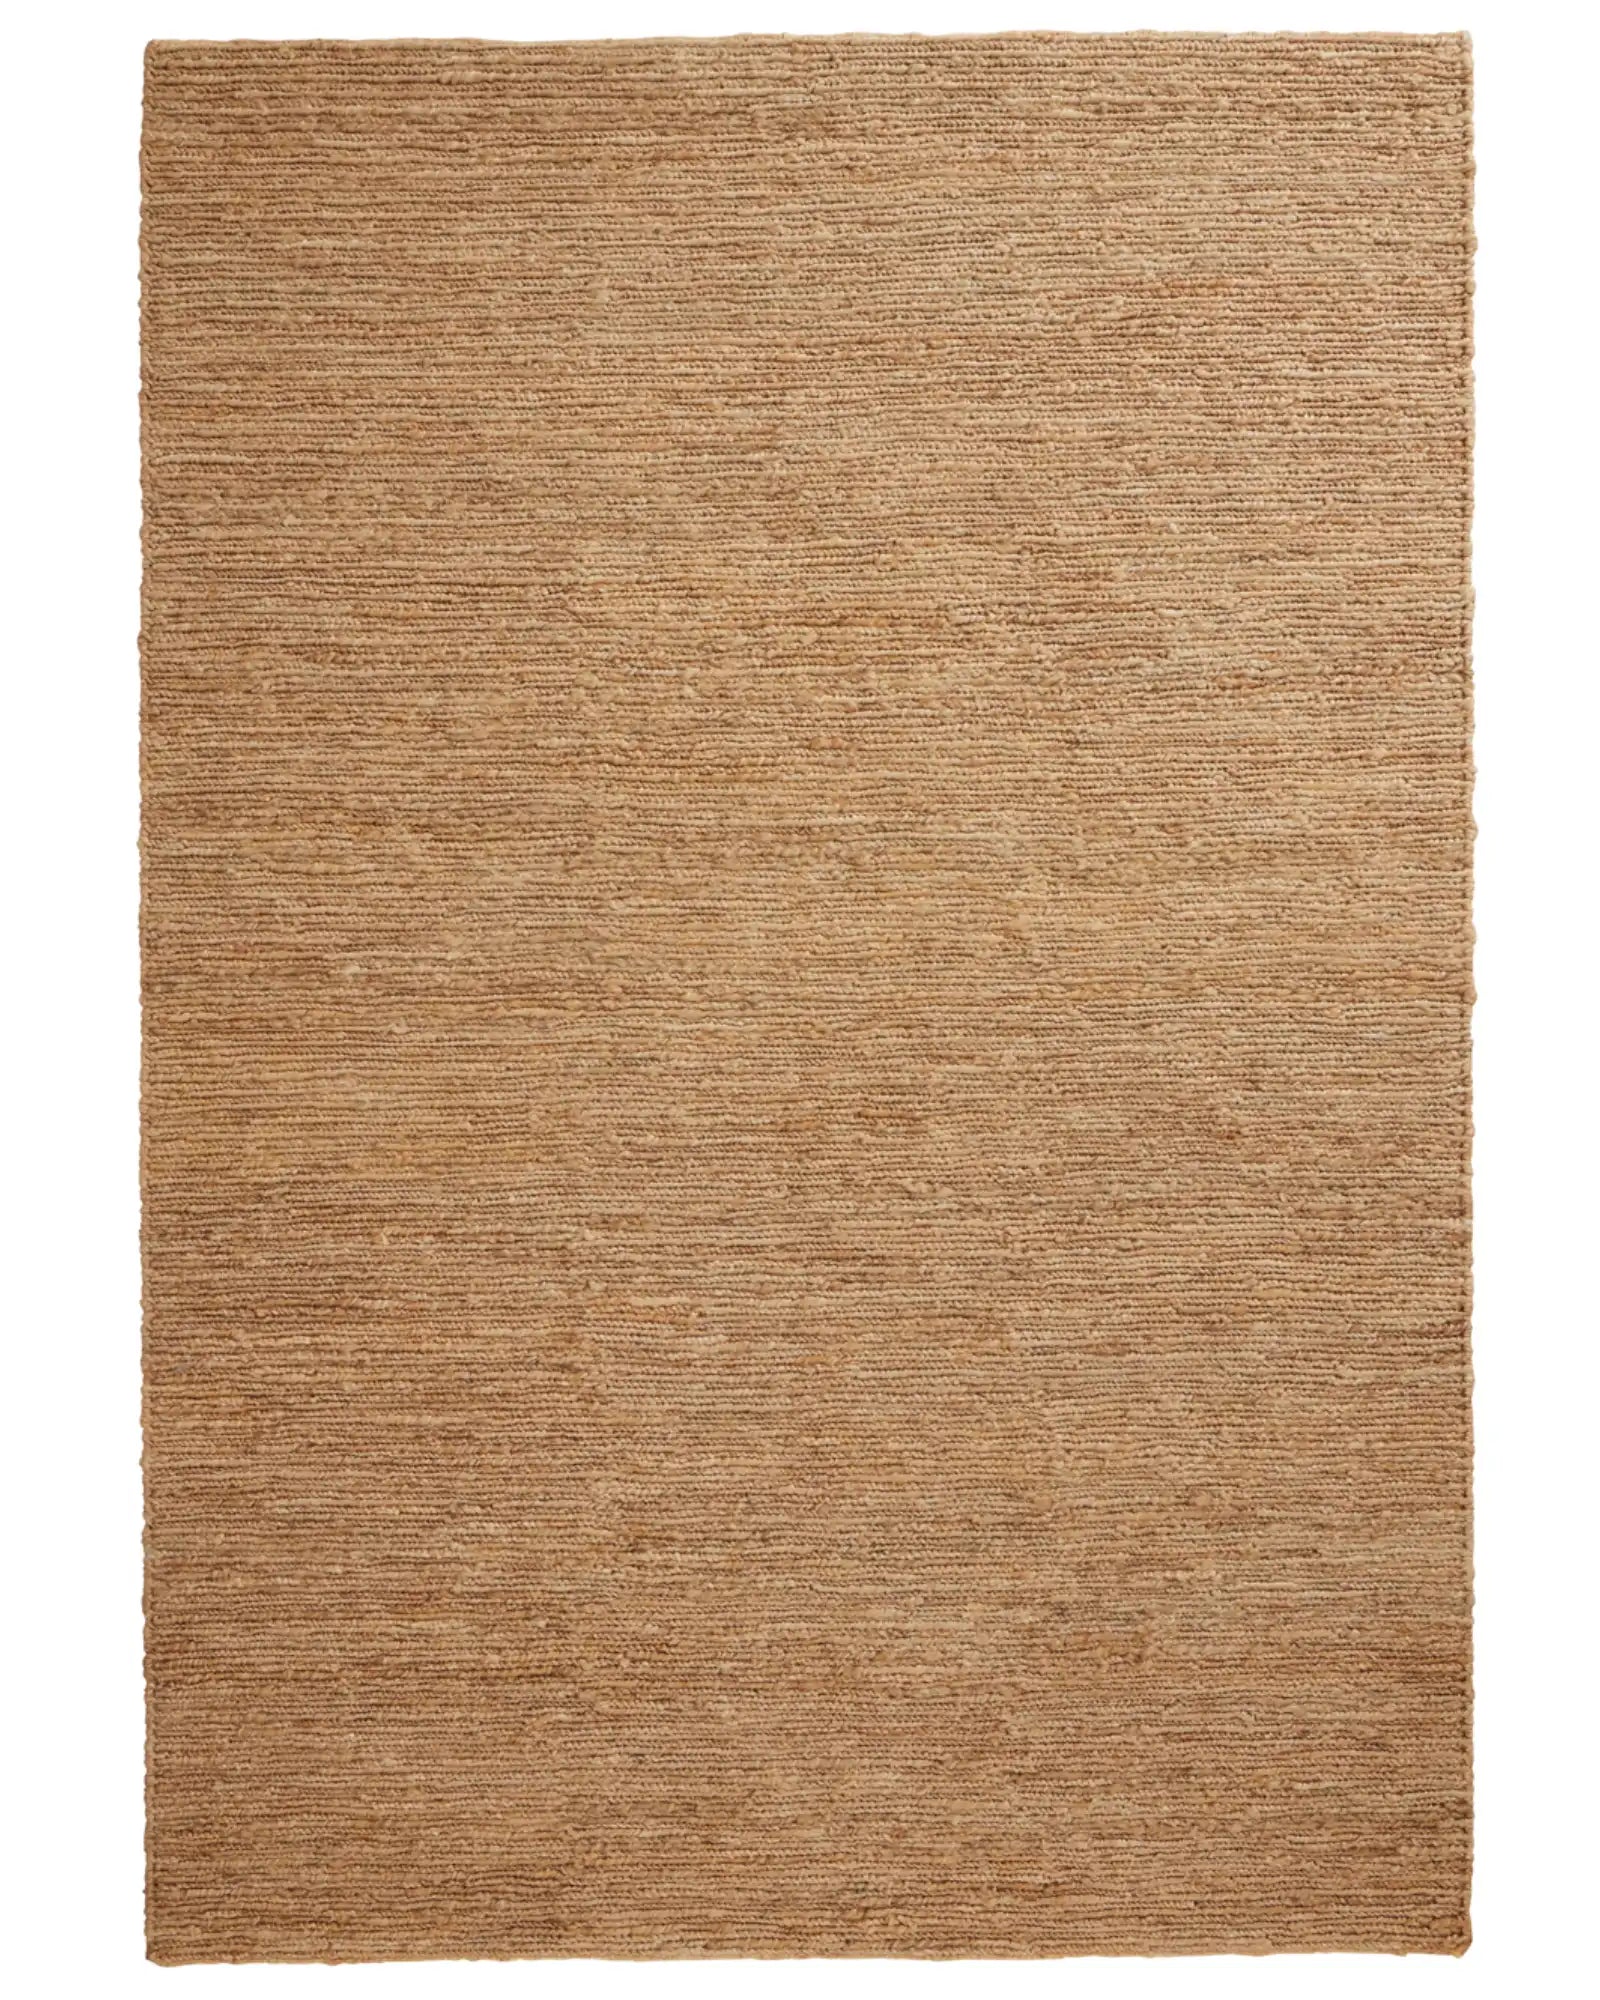 Weave Suffolk Floor Rug - Natural RSK03NATU